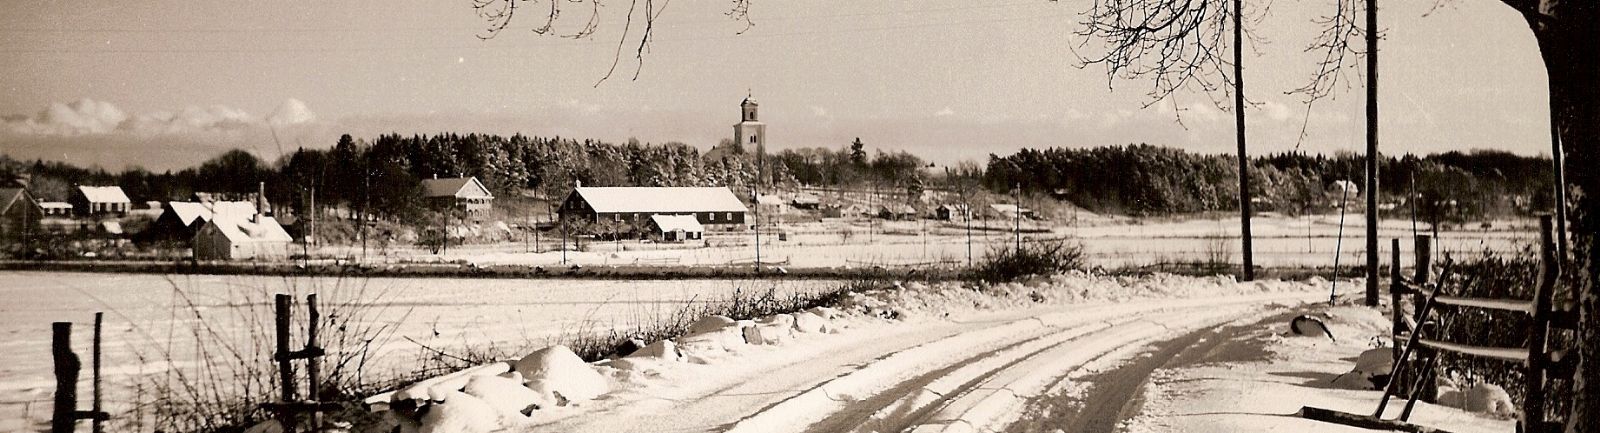 Tvings kyrka februari 1956 (beskuren). Bilden Ã¤r tagen av Ã…ke Widfeldt vars mor Olga Widfeldt Karlsson var skribent i tidningen SydÃ¶stran. Bilden har illustrerat hennes krÃ¶nikor frÃ¥n Tving-bygden.